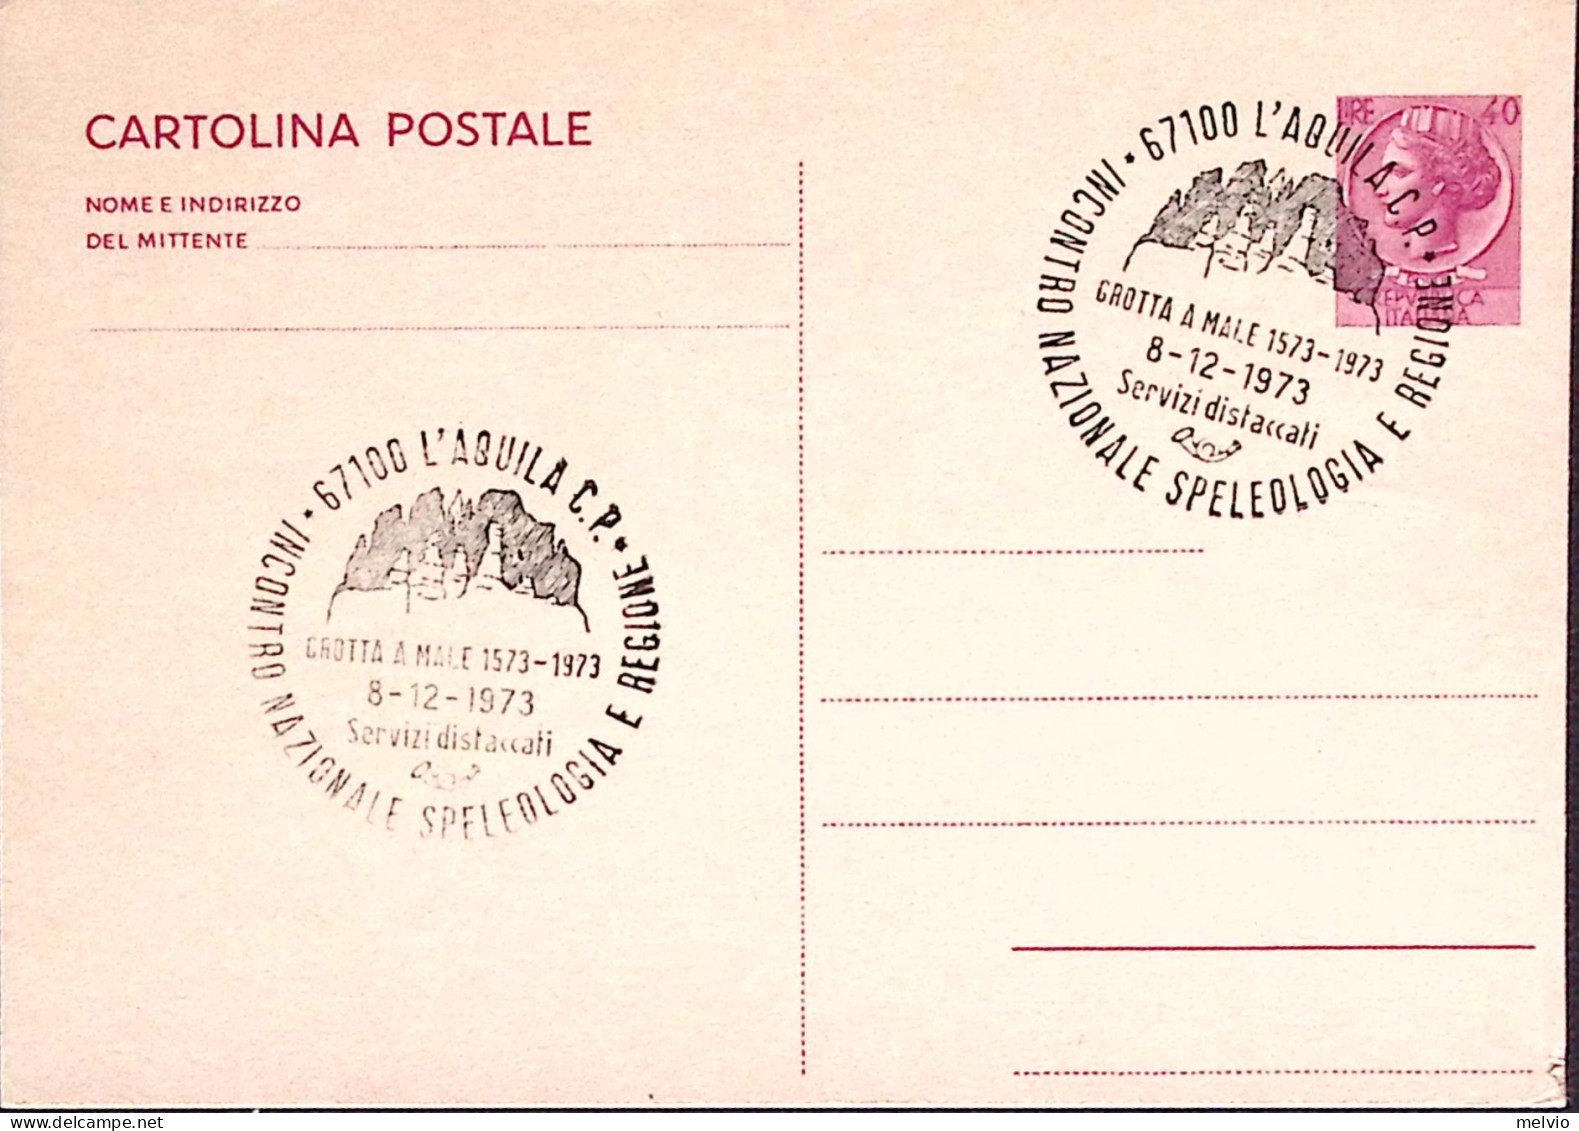 1973-l'AQUILA INCONTRO SPELEOLOGIA (8.12) Annullo Speciale Cartolina Postale - 1971-80: Marcophilie